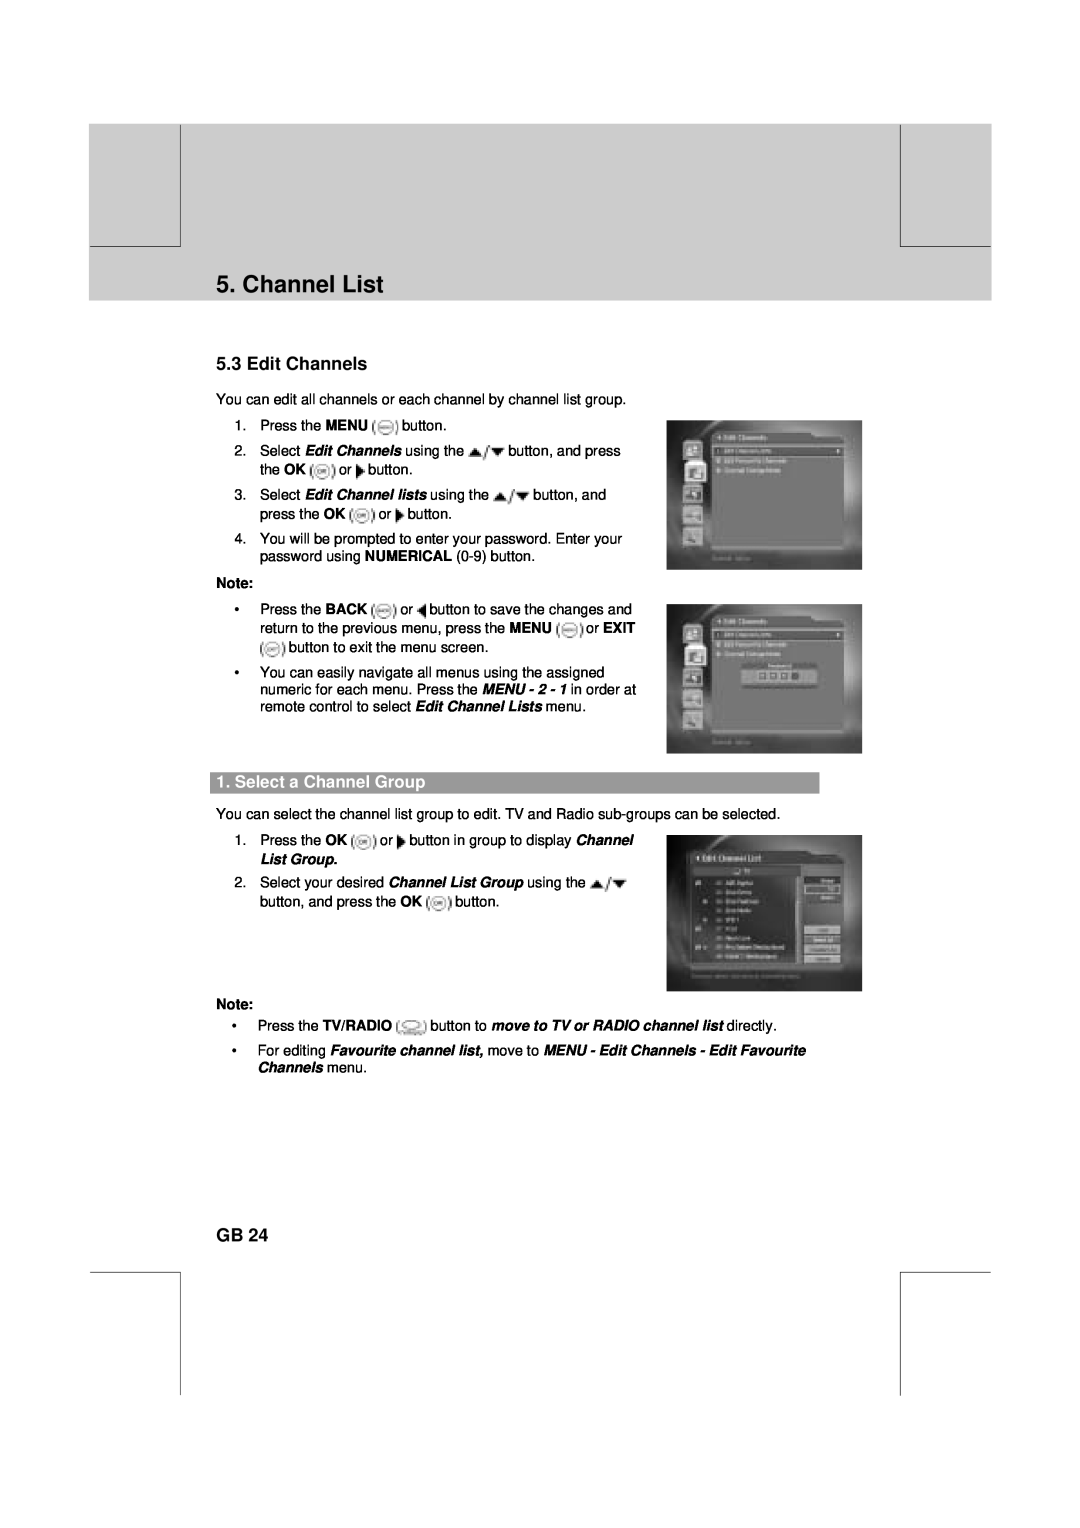 Humax VA-FOX T manual Edit Channels, Select a Channel Group, Channel List 